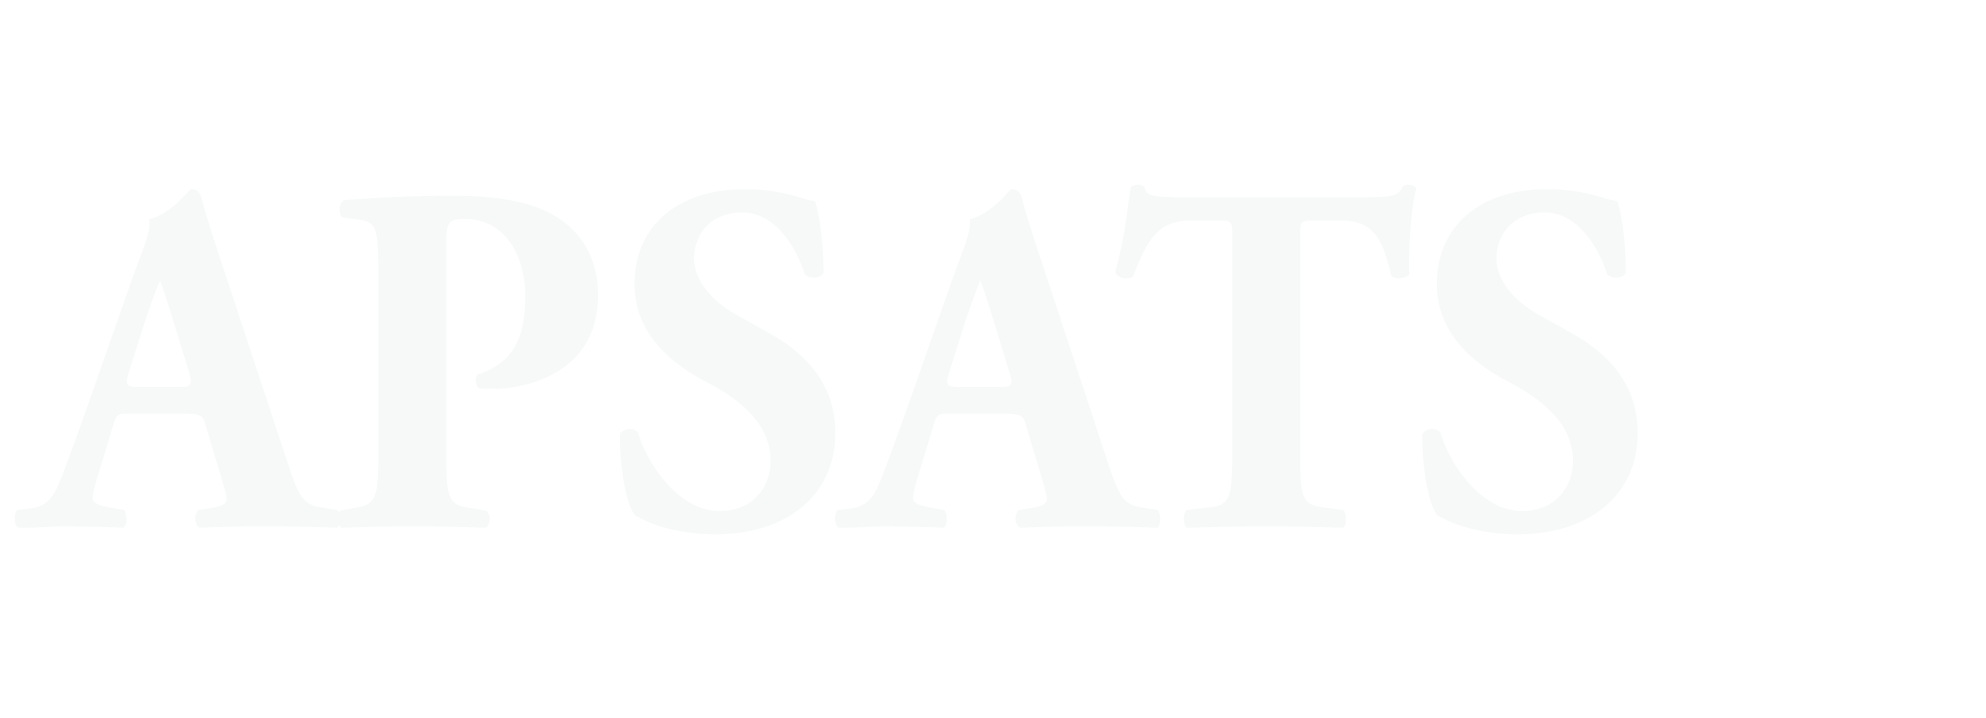 APSATS-logo